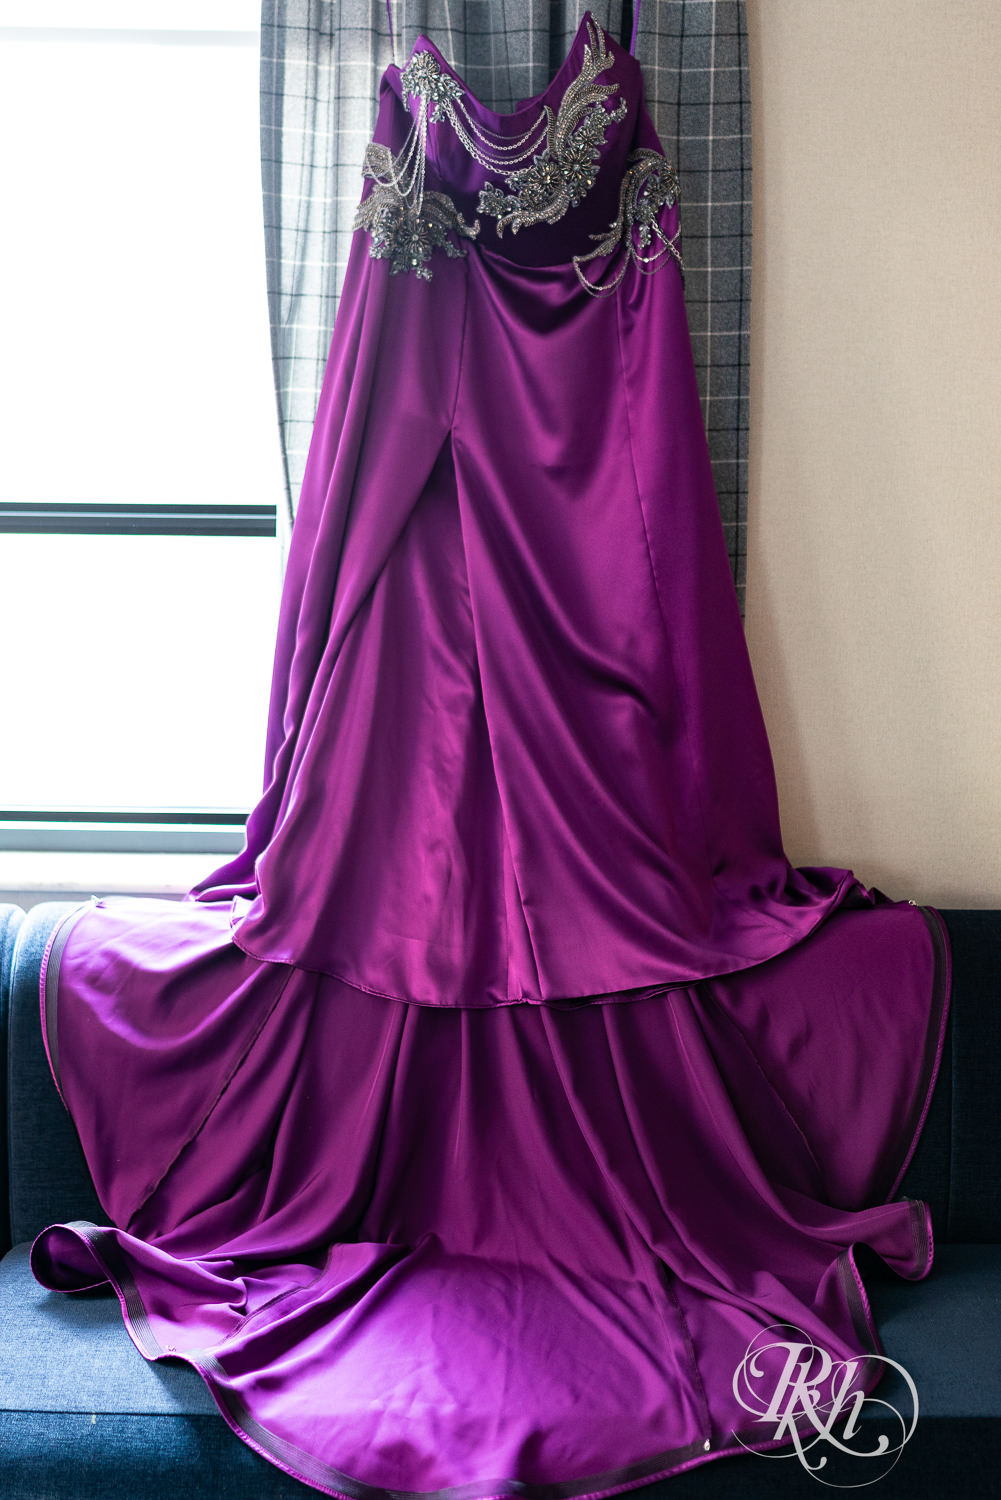 Purple wedding dress hanging on the wall. 